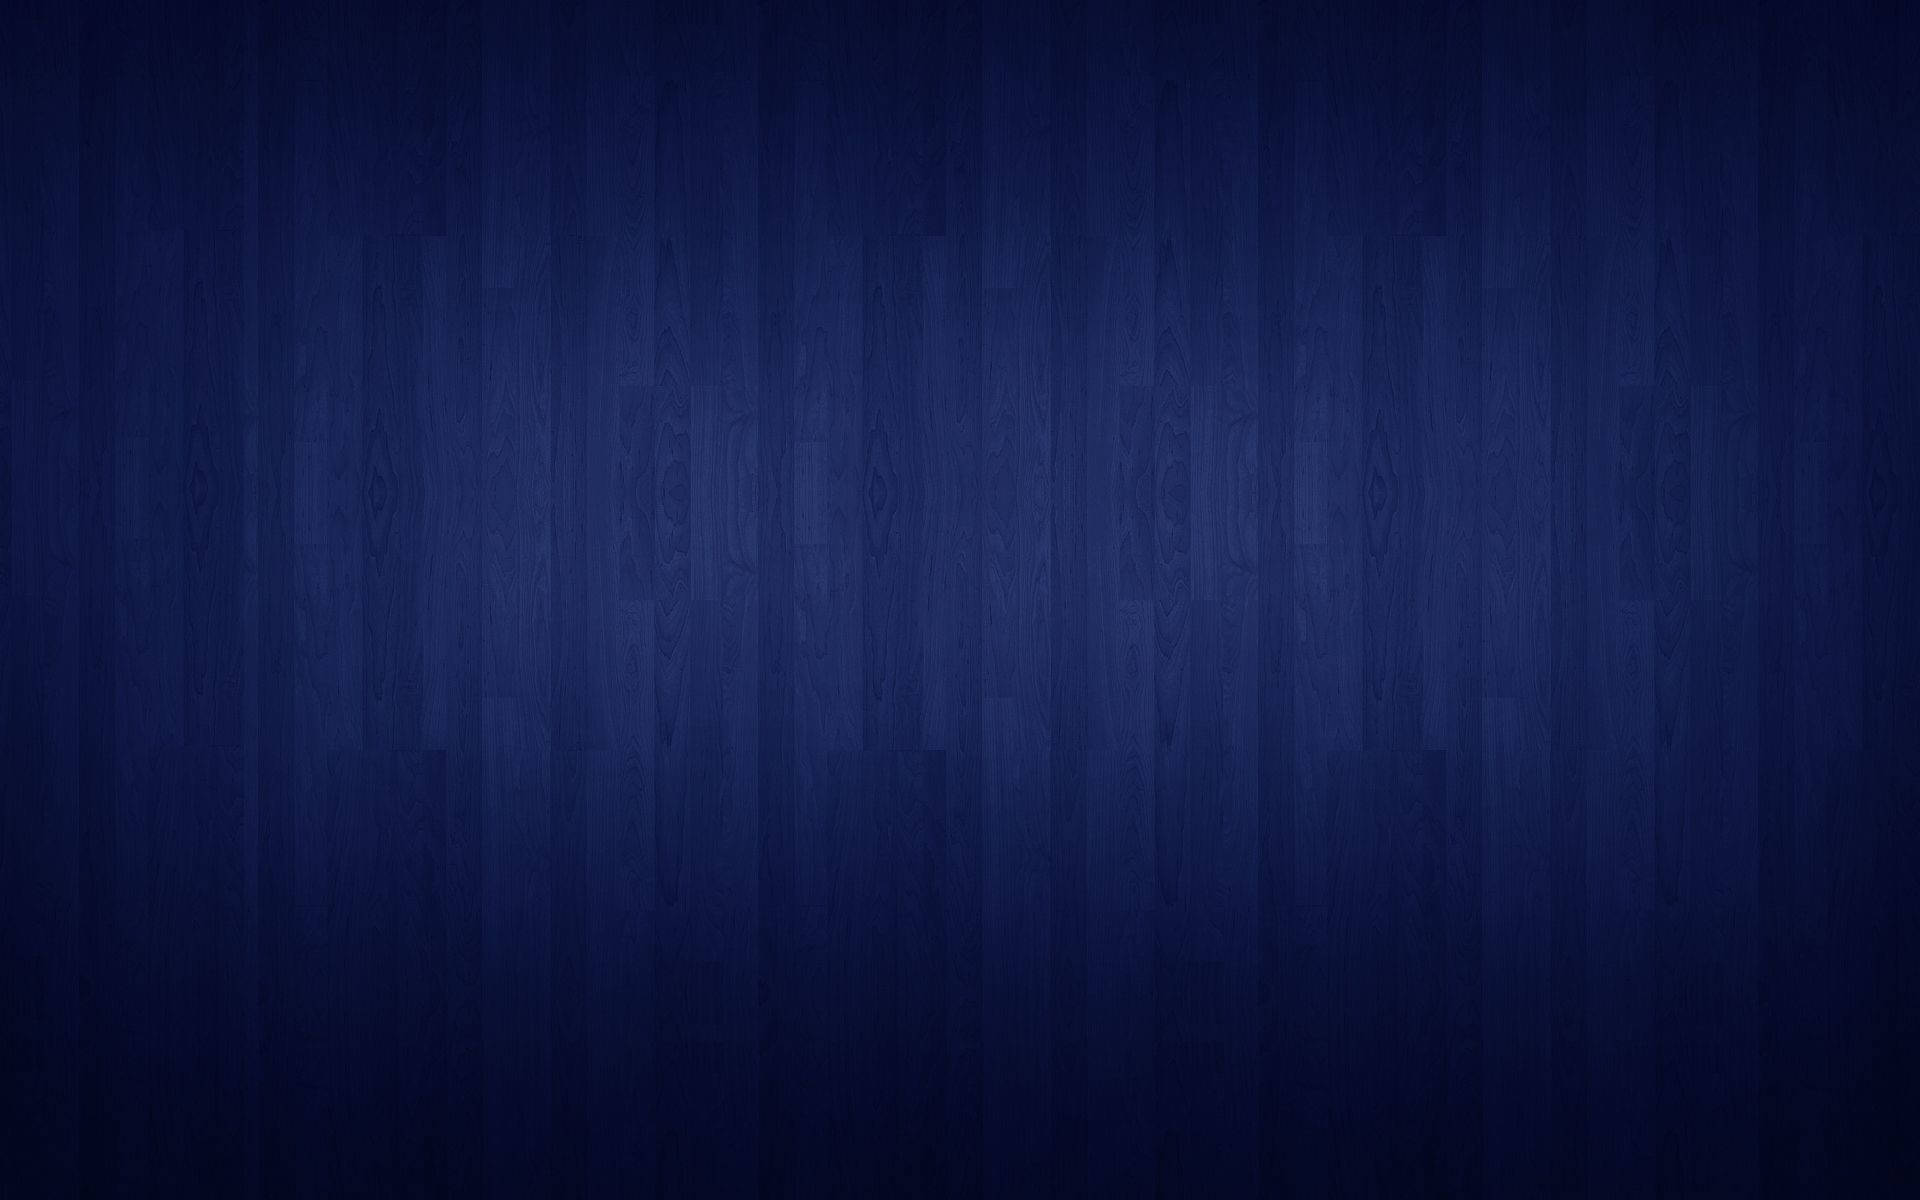 Wood Dark And Blue Aesthetic Laptop Wallpaper